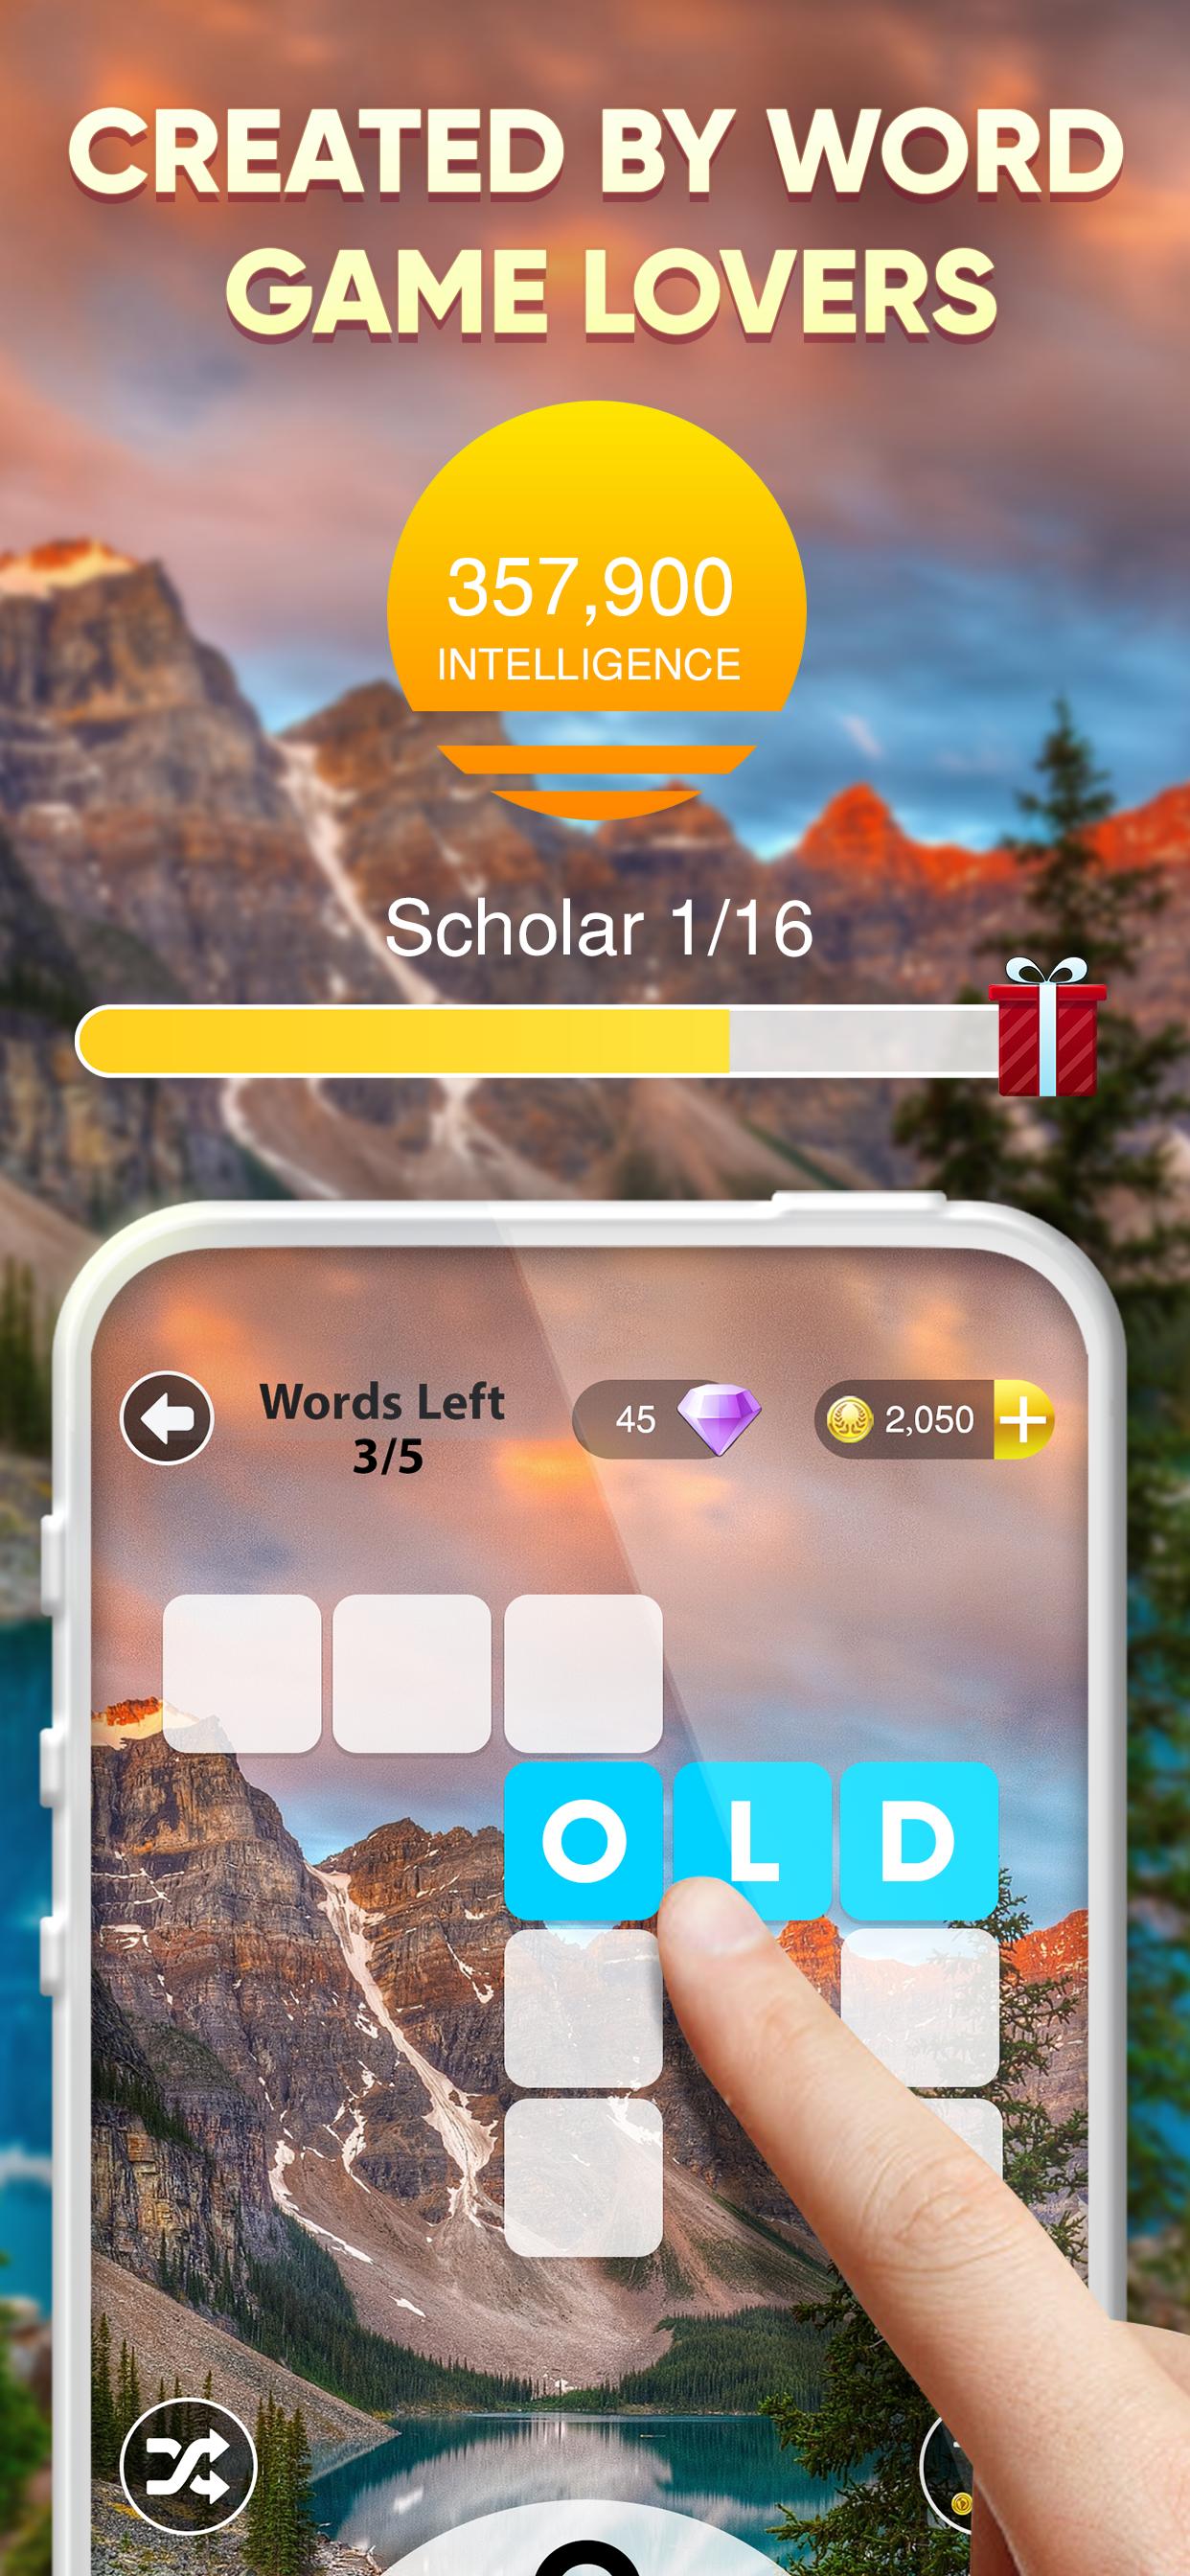 WordRise - Live Word Scramble Tournaments 1.0.0.39 Screenshot 4